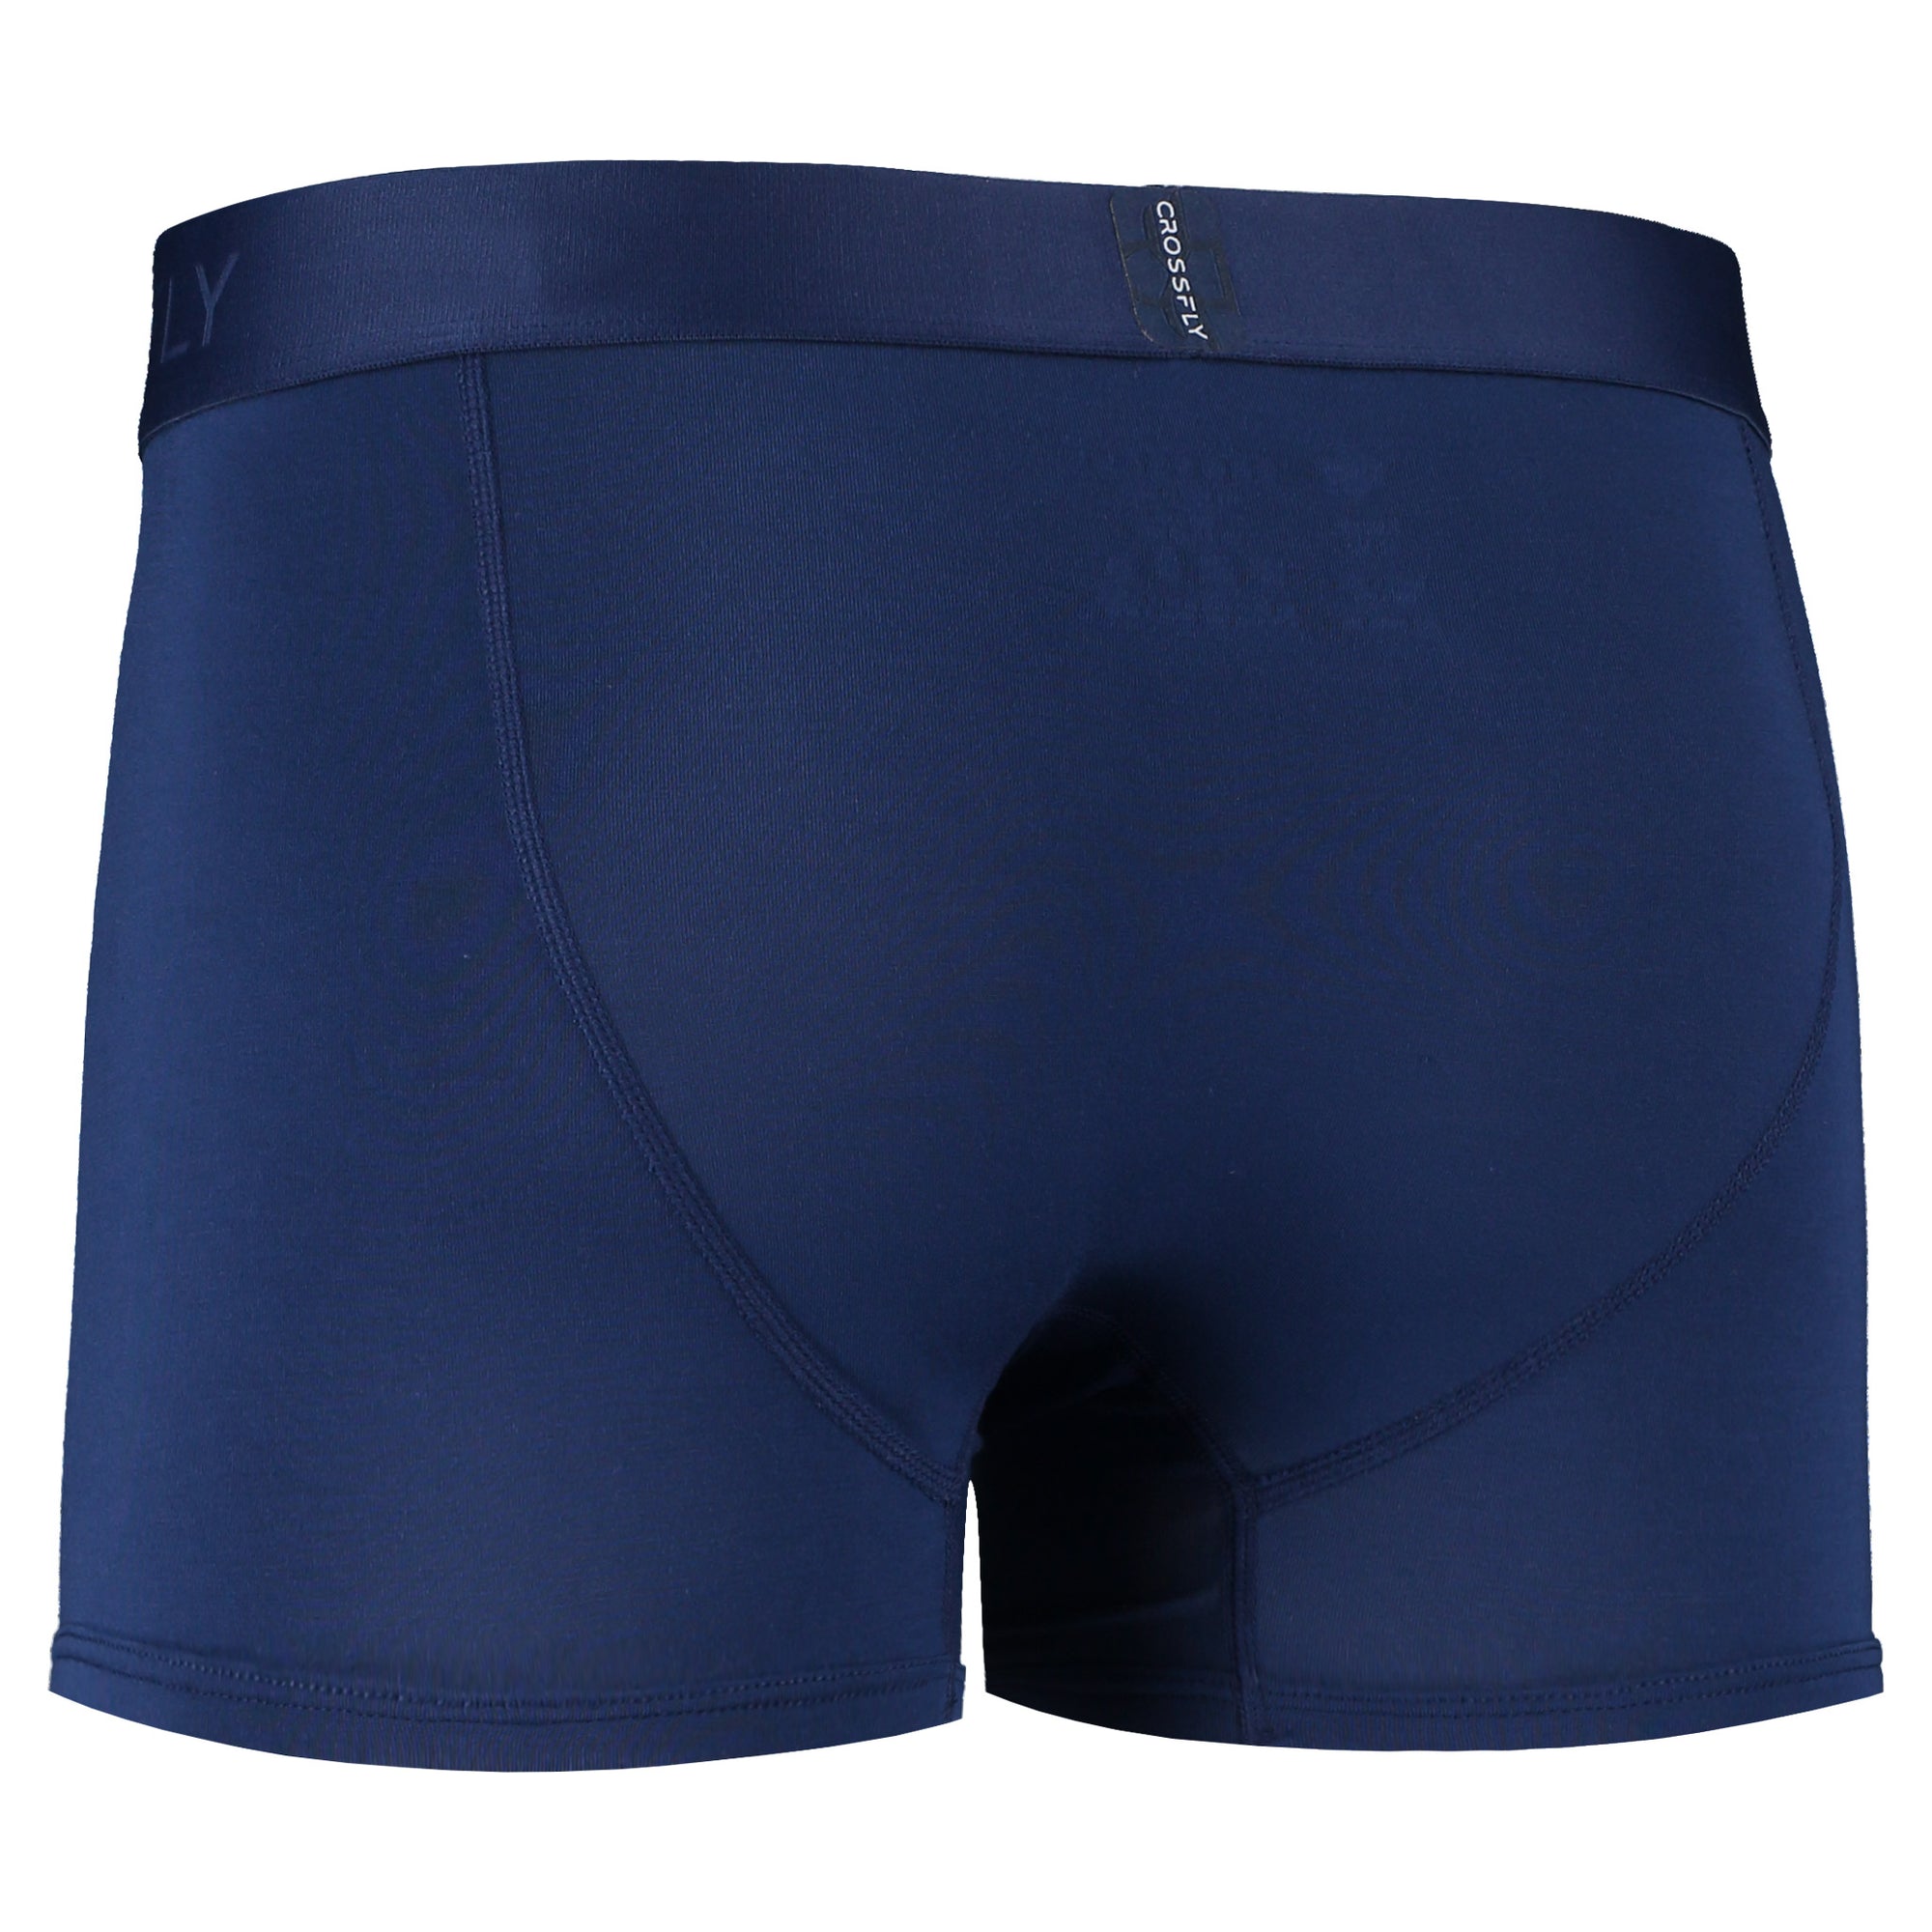 The Most Comfortable Underwear for Men - Crossfly